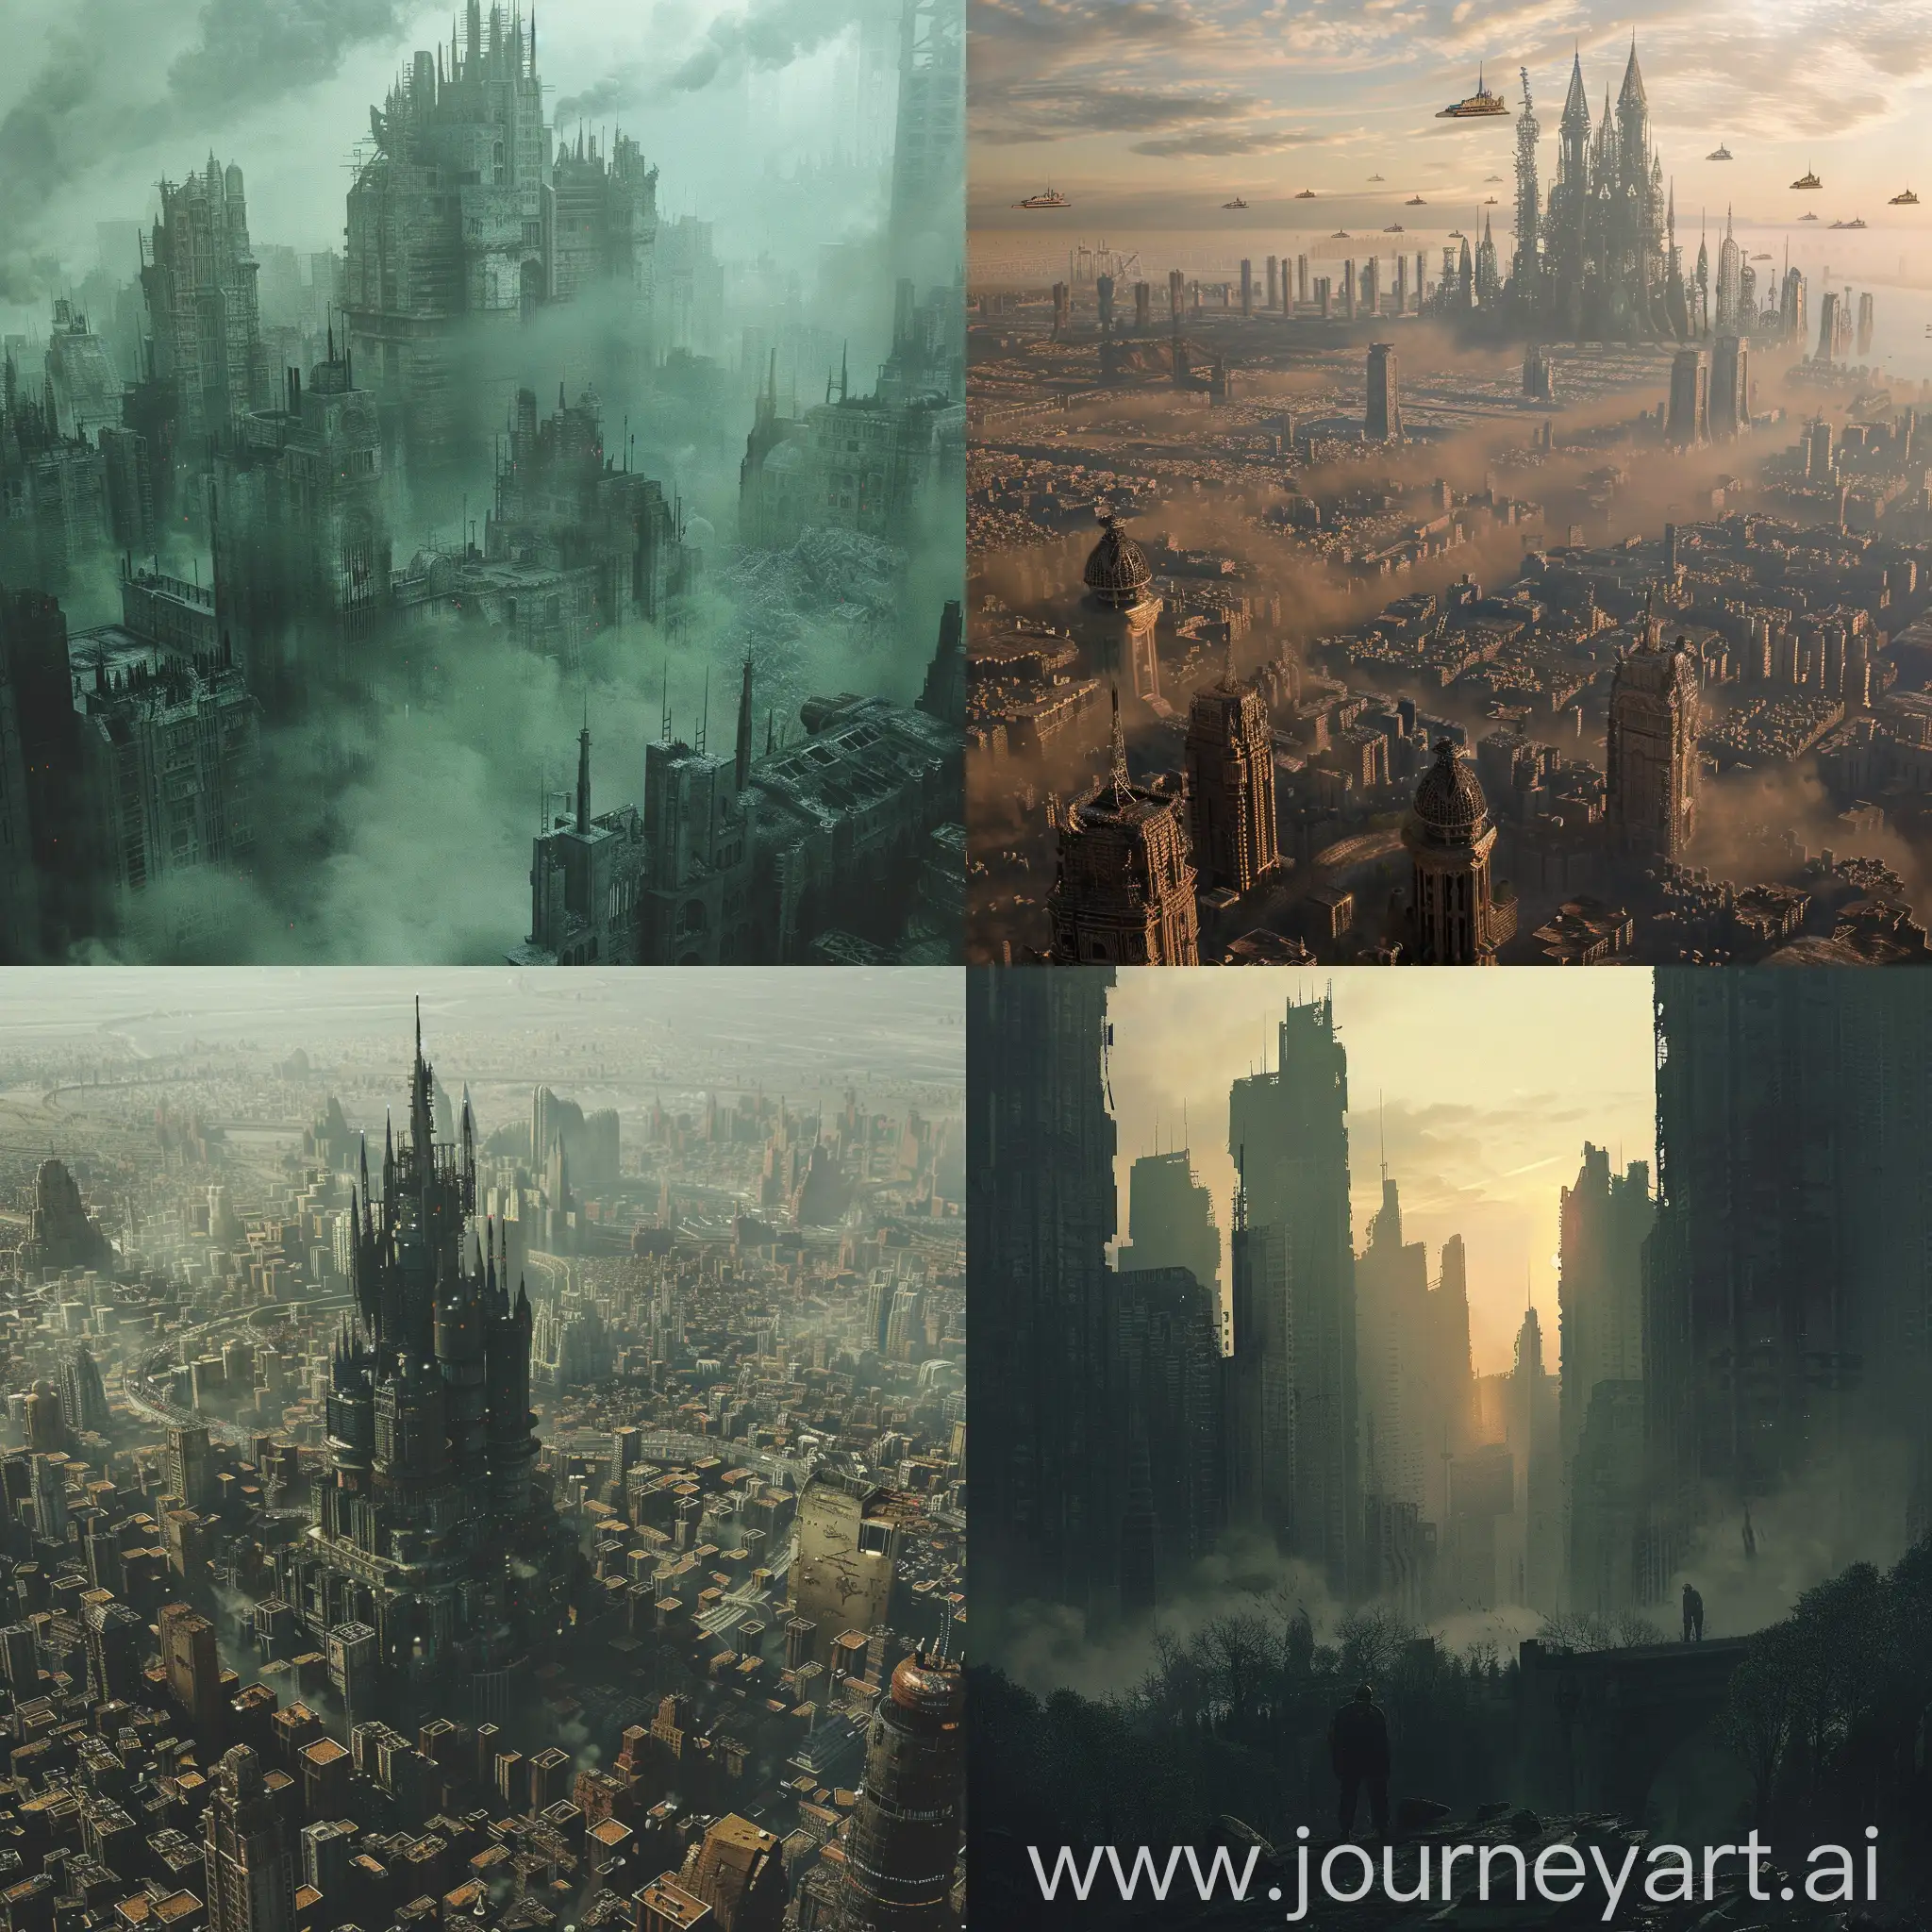 city after humans have vanished